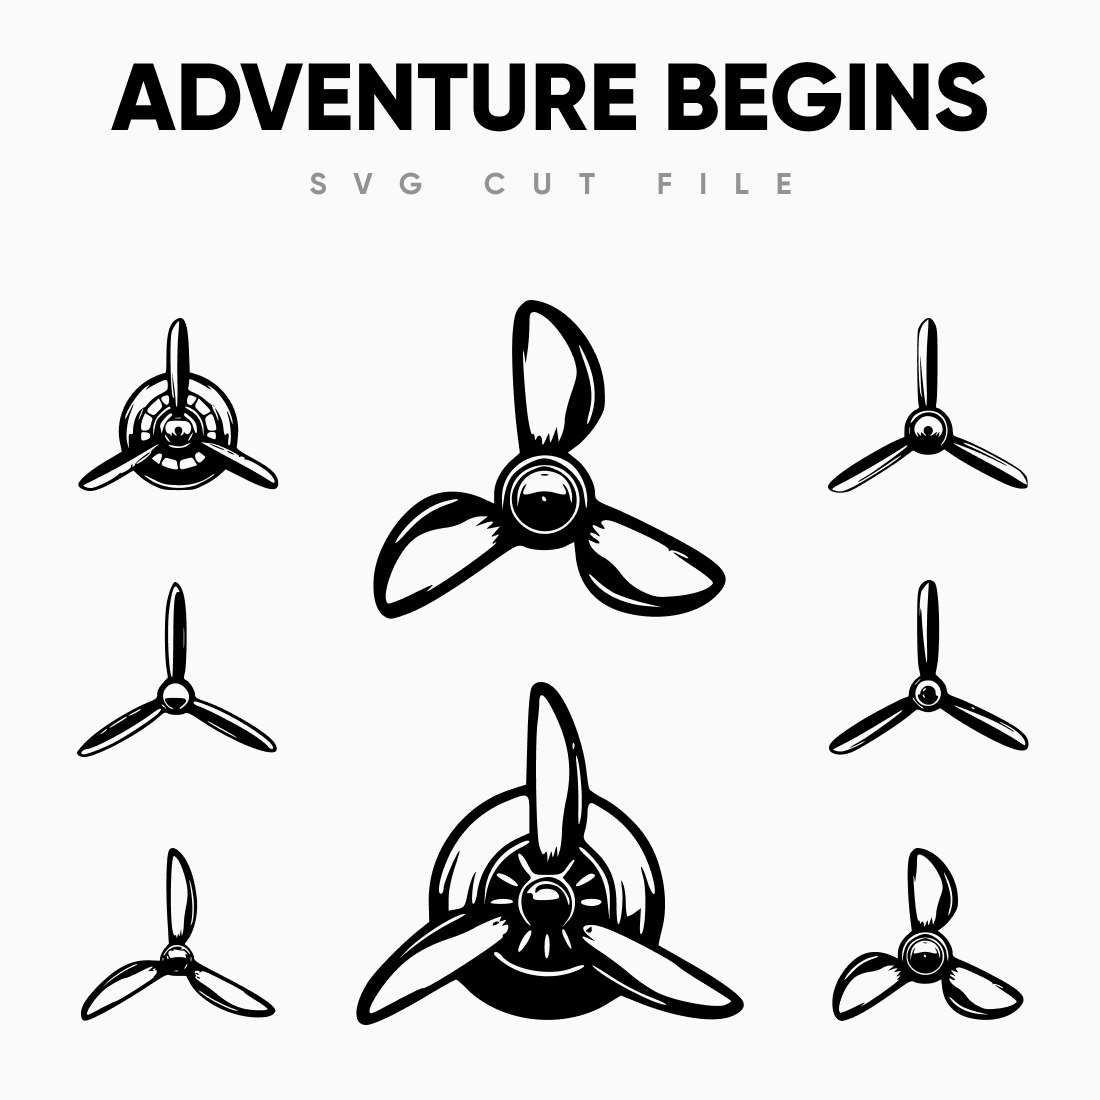 Adventure begins SVG.